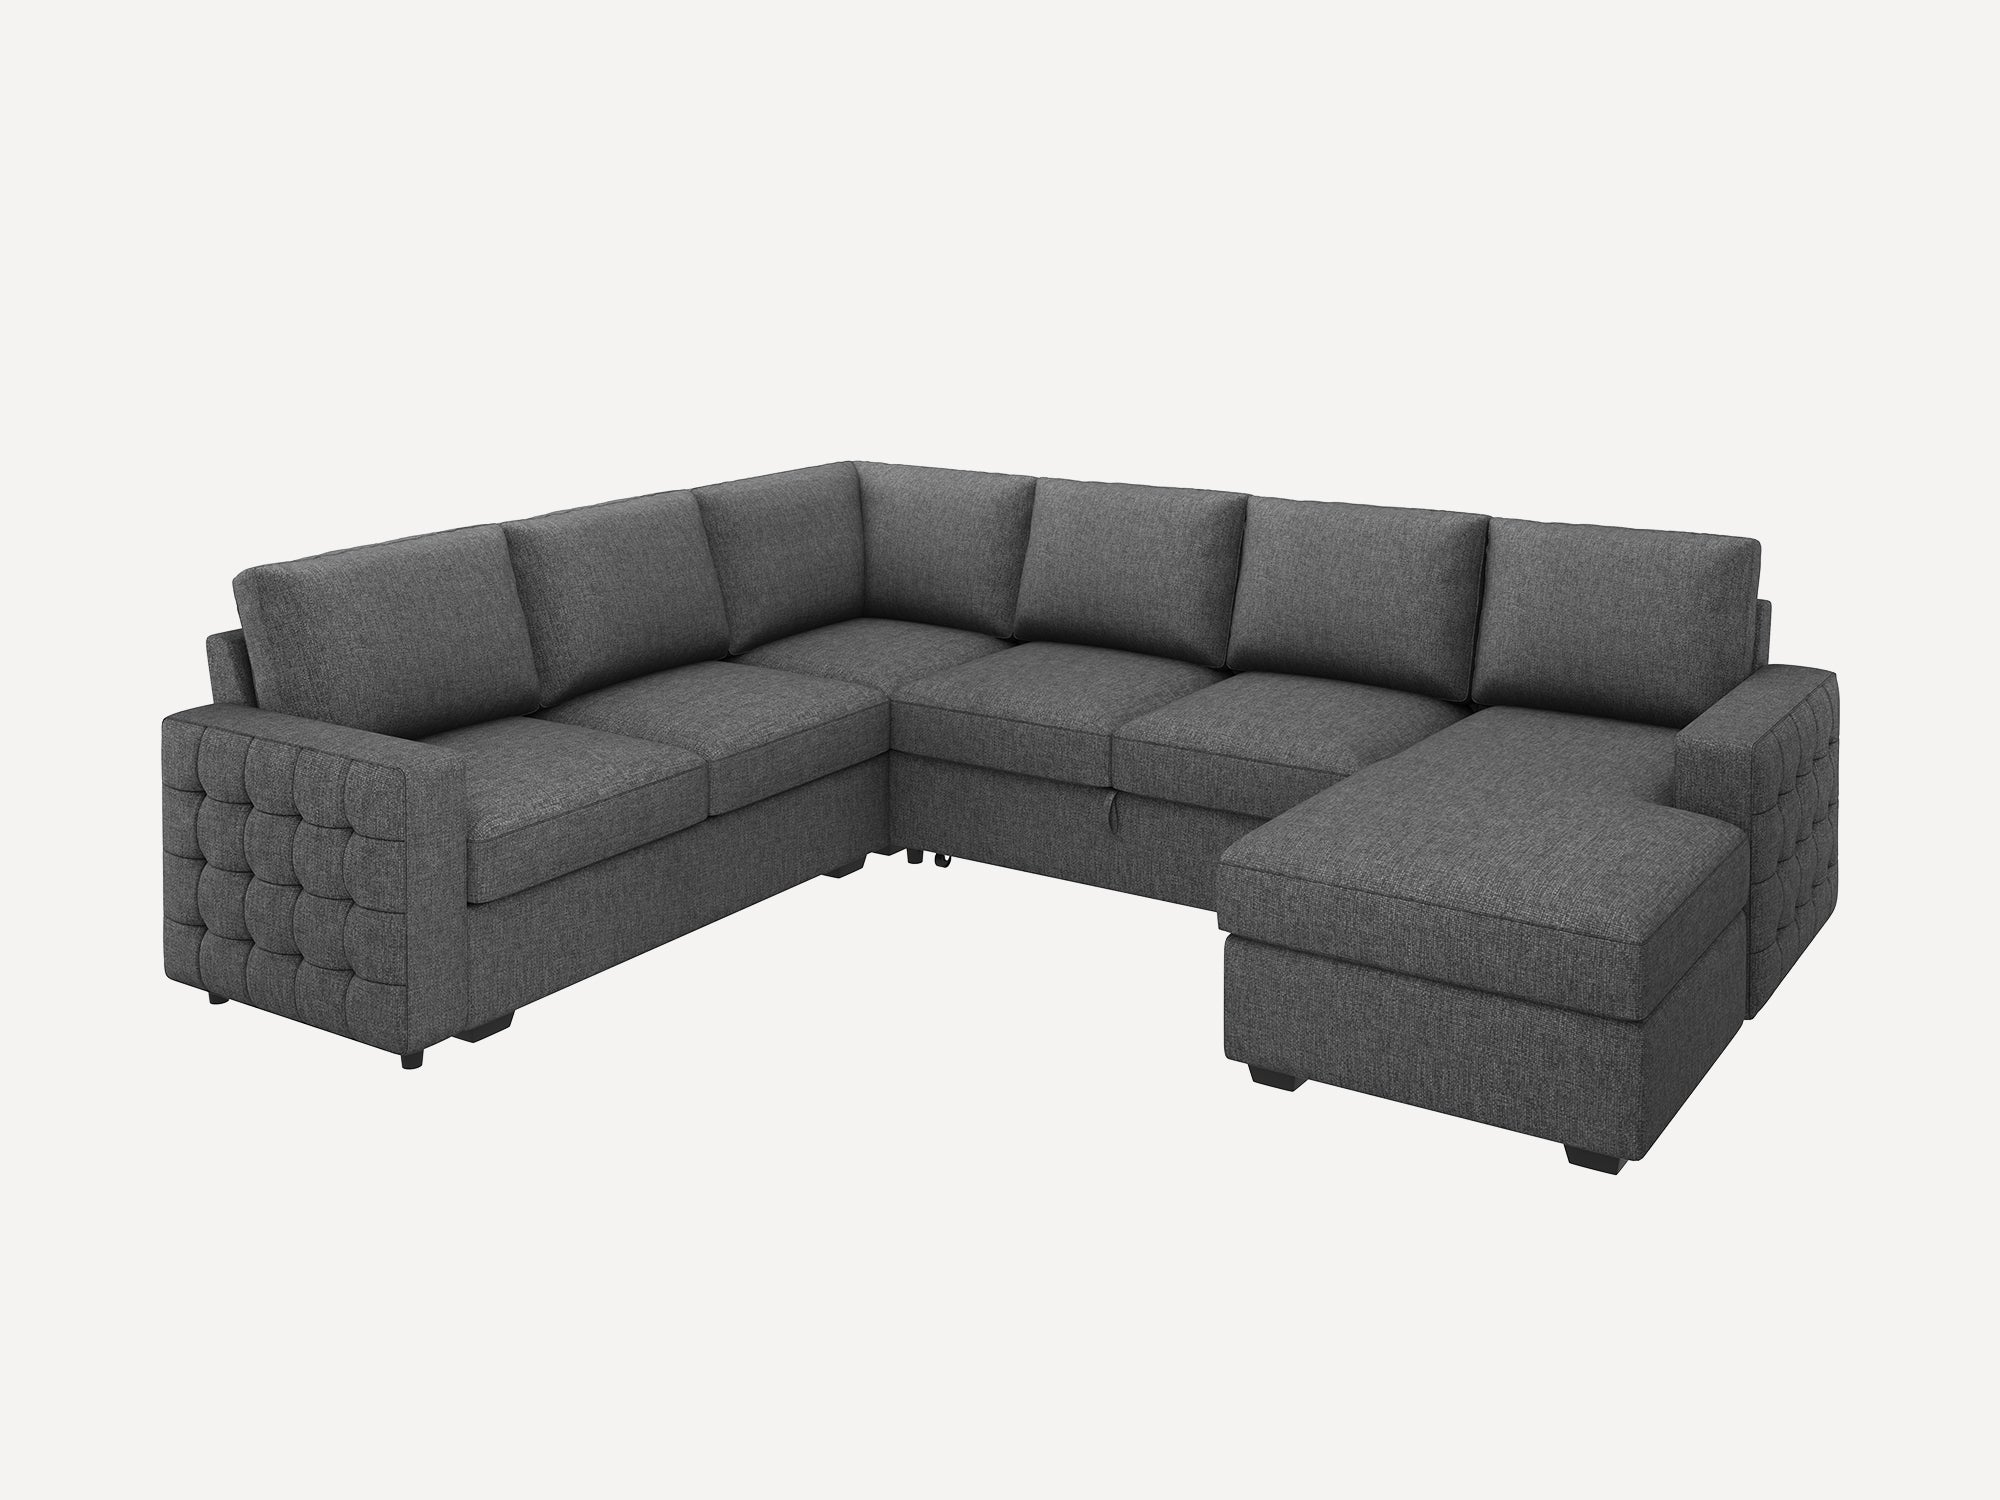 Honbay 6 Seat U Shaped Sectional Sofa